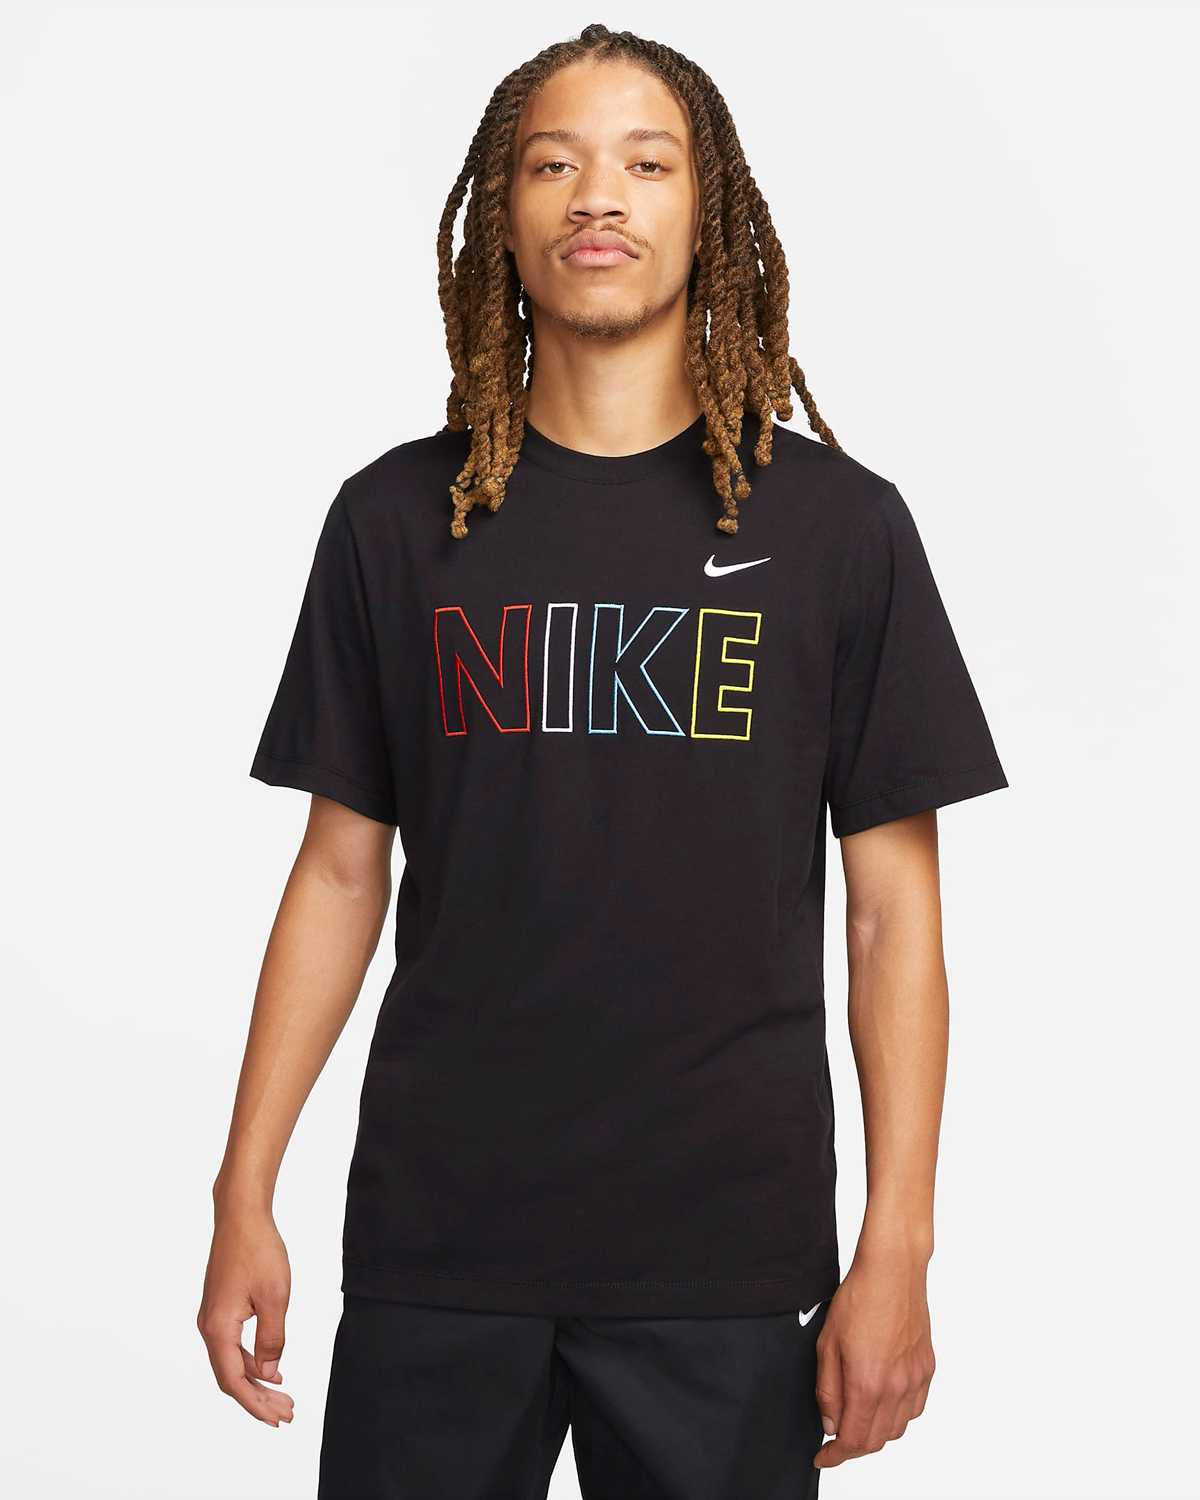 Nike-Sportswear-Graphic-T-Shirt-Black-White-Multi-Color